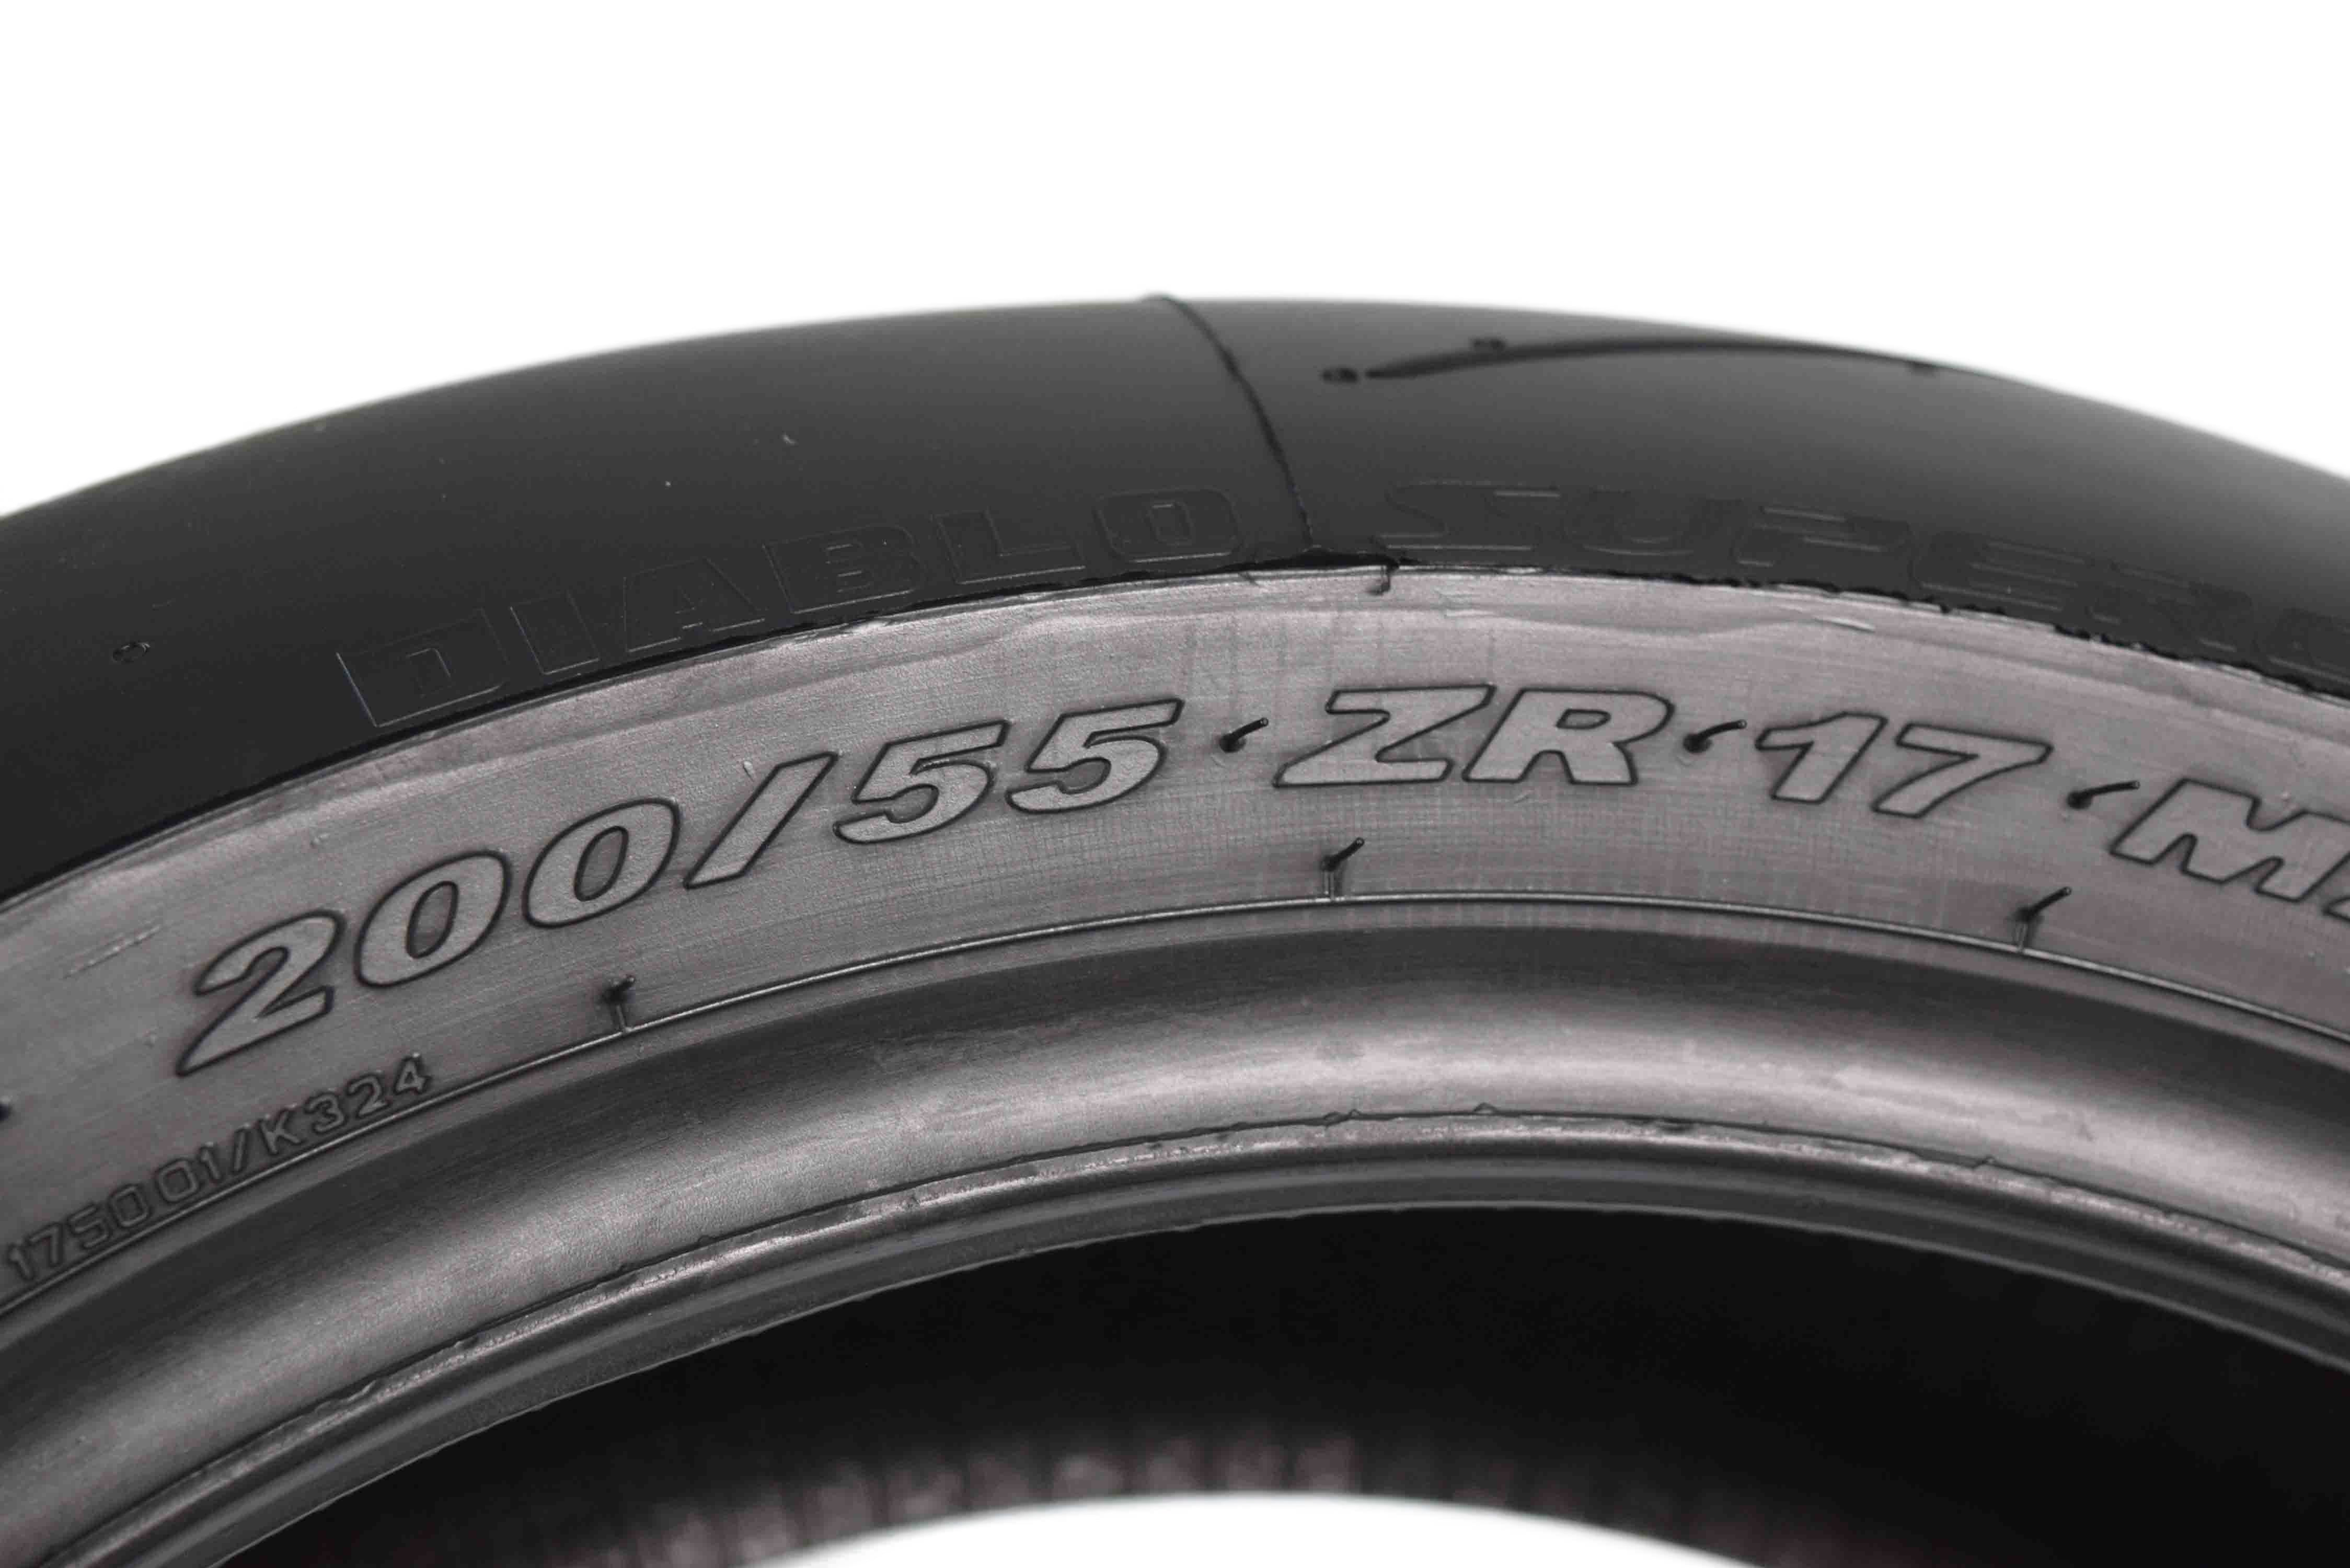 Pirelli-Tire-200-55ZR17-SUPER-CORSA-V2-Radial-Motorcycle-Rear-Tire-200-55-17-image-6